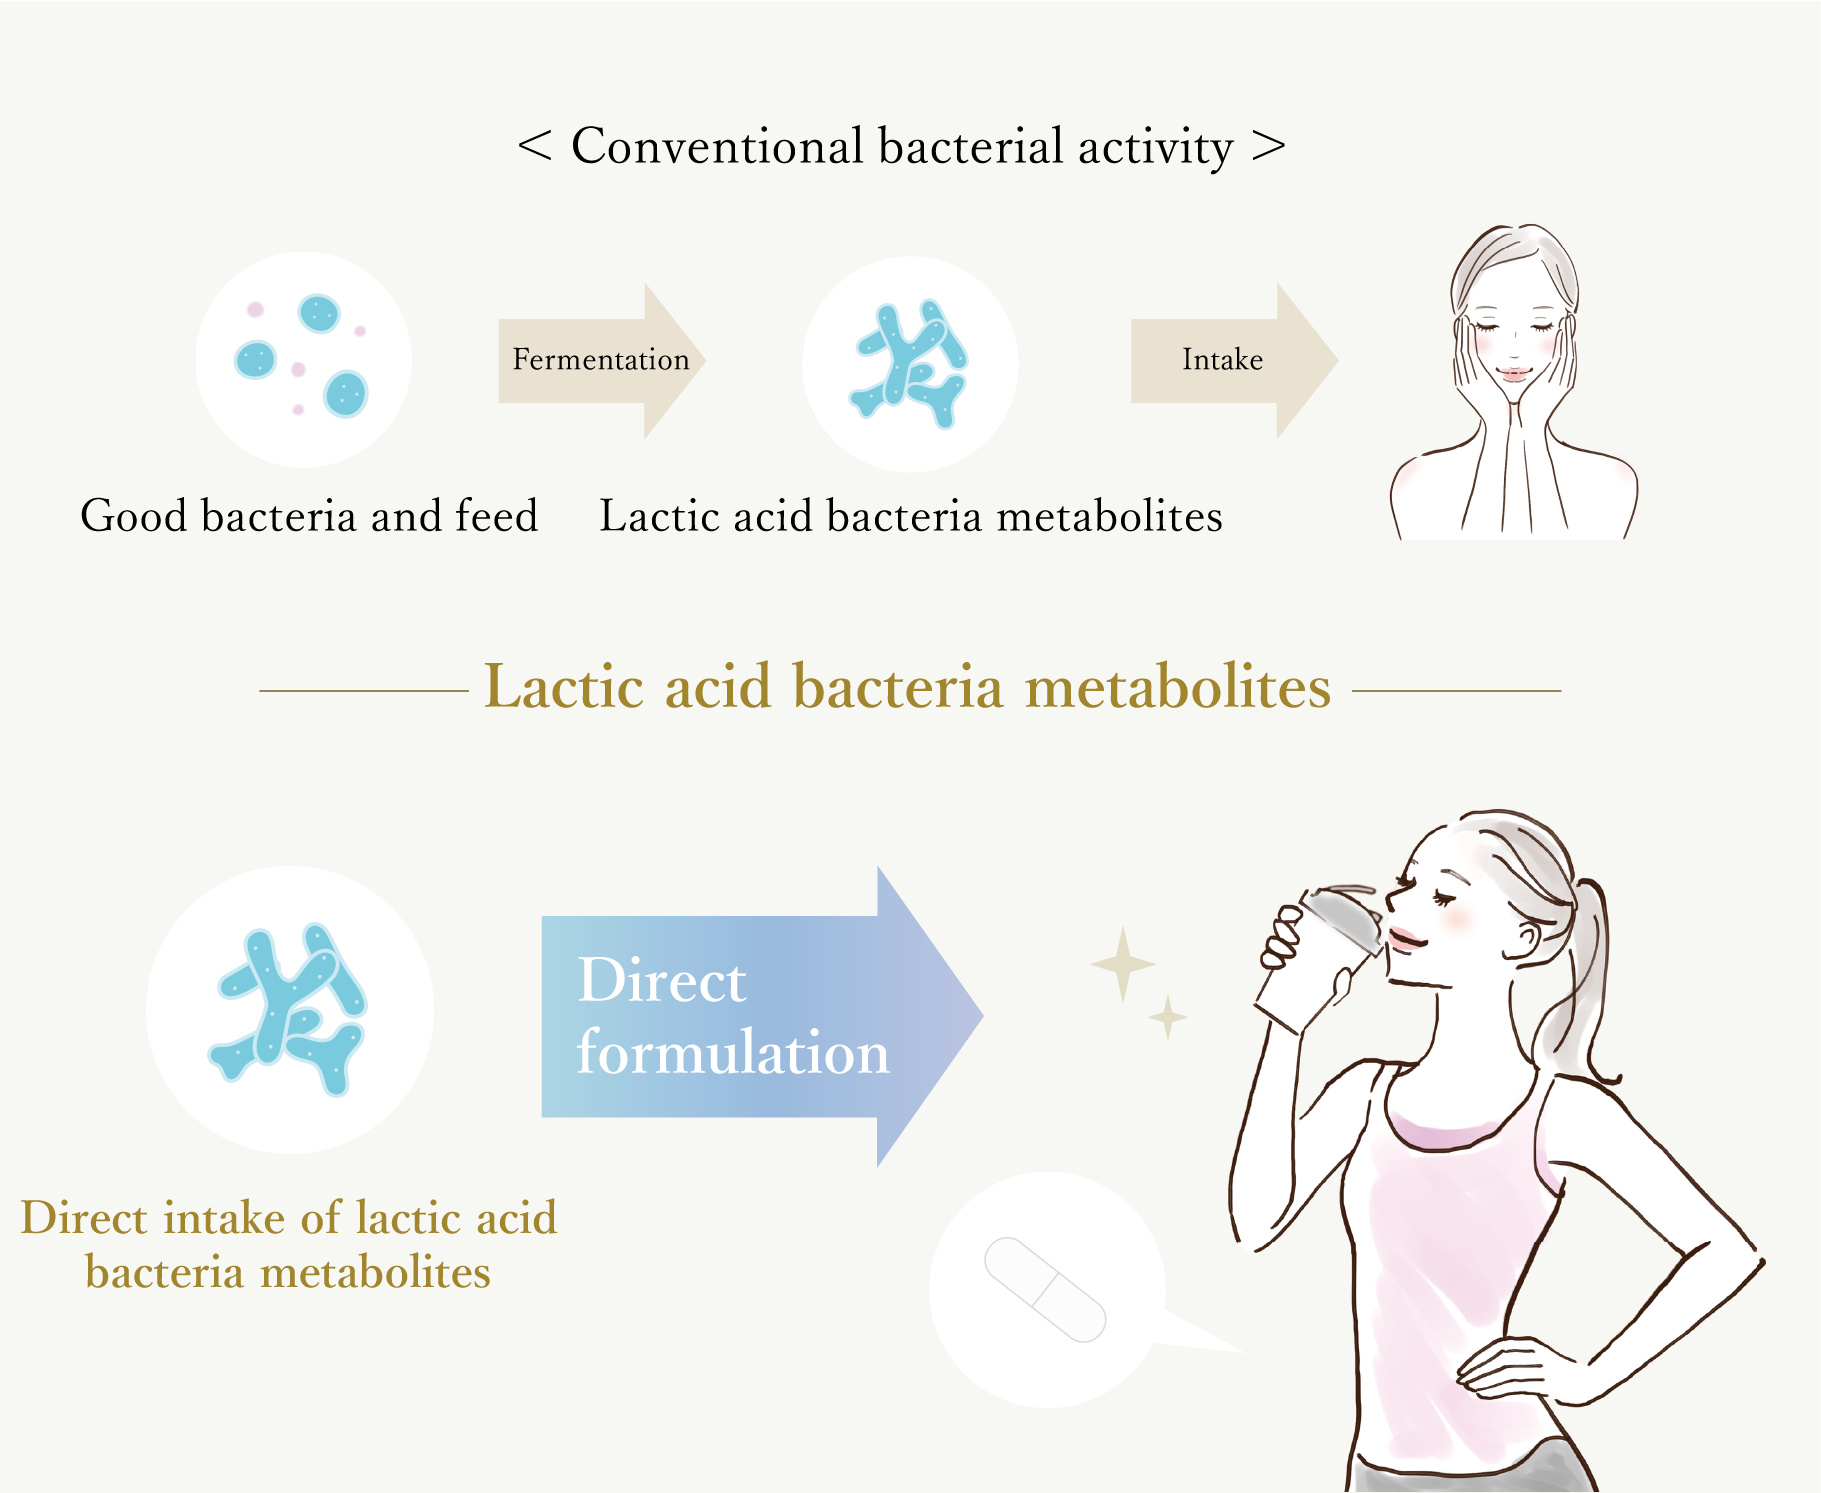 Lactic acid bacteria metabolites image